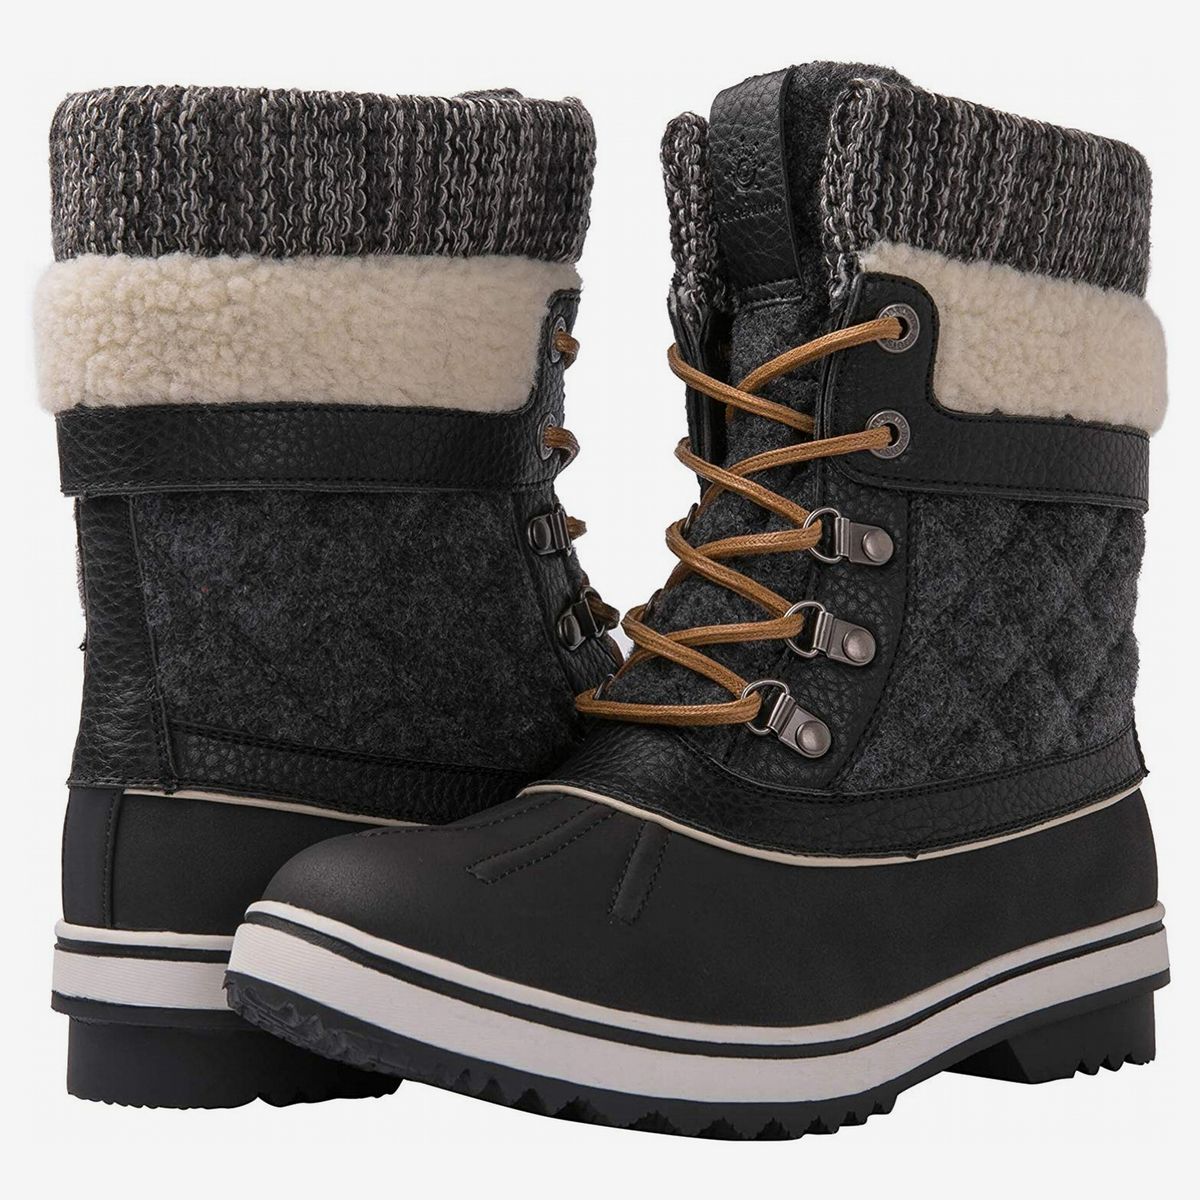 women's winter boots for wide feet